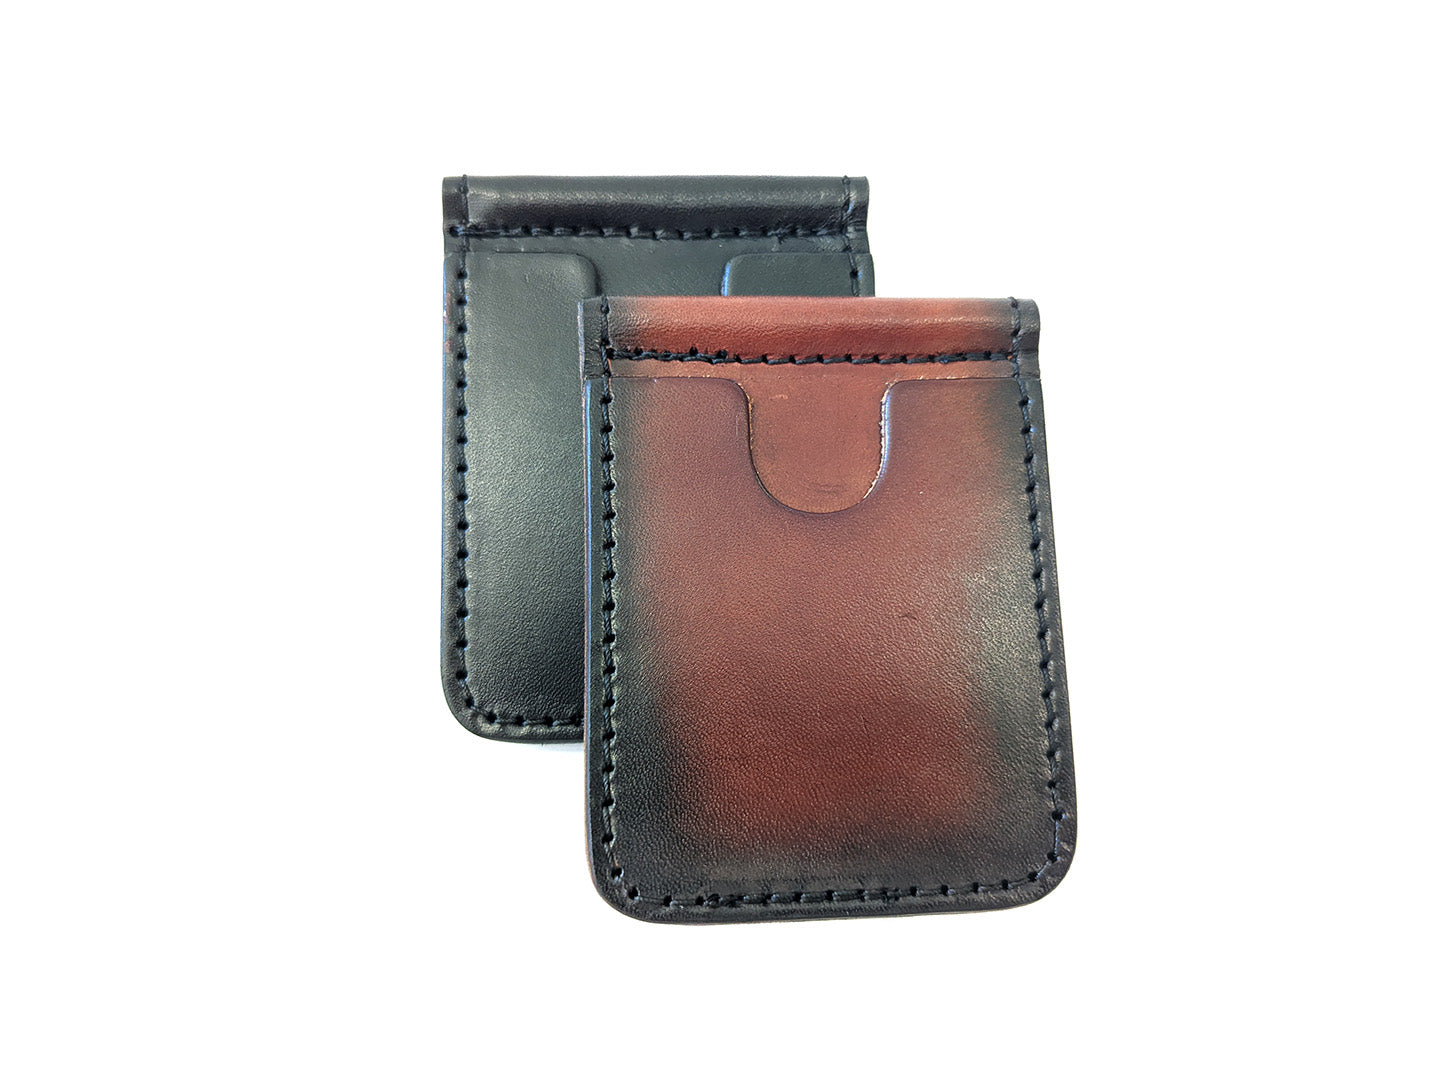 Louis Vuitton Lv man short wallet 2 folds money clips